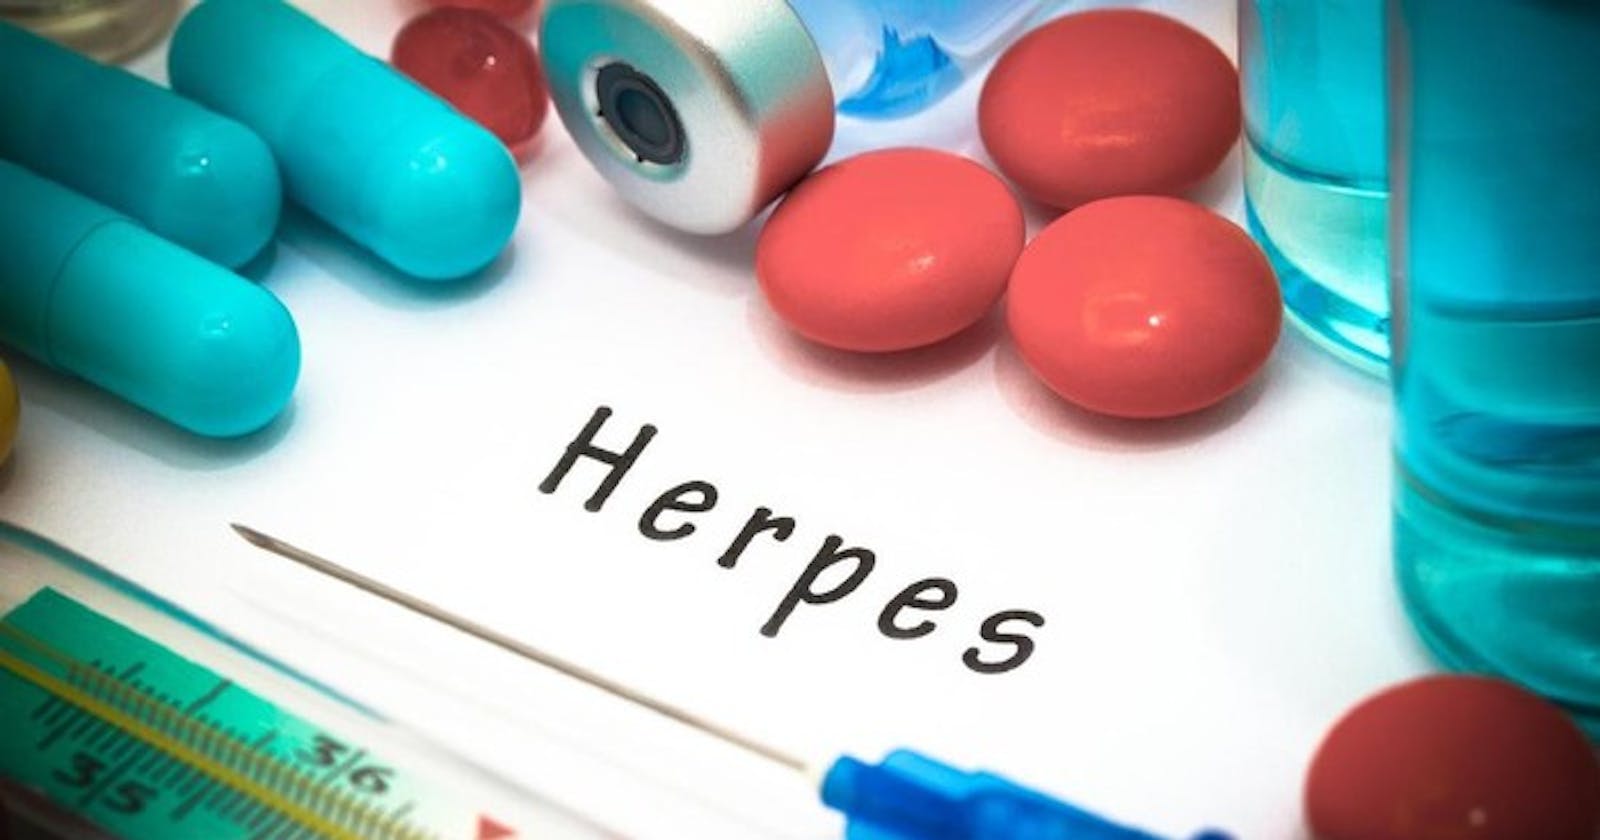 Komplikasi Yang Dapat Ditimbulkan Dari Herpes Genital